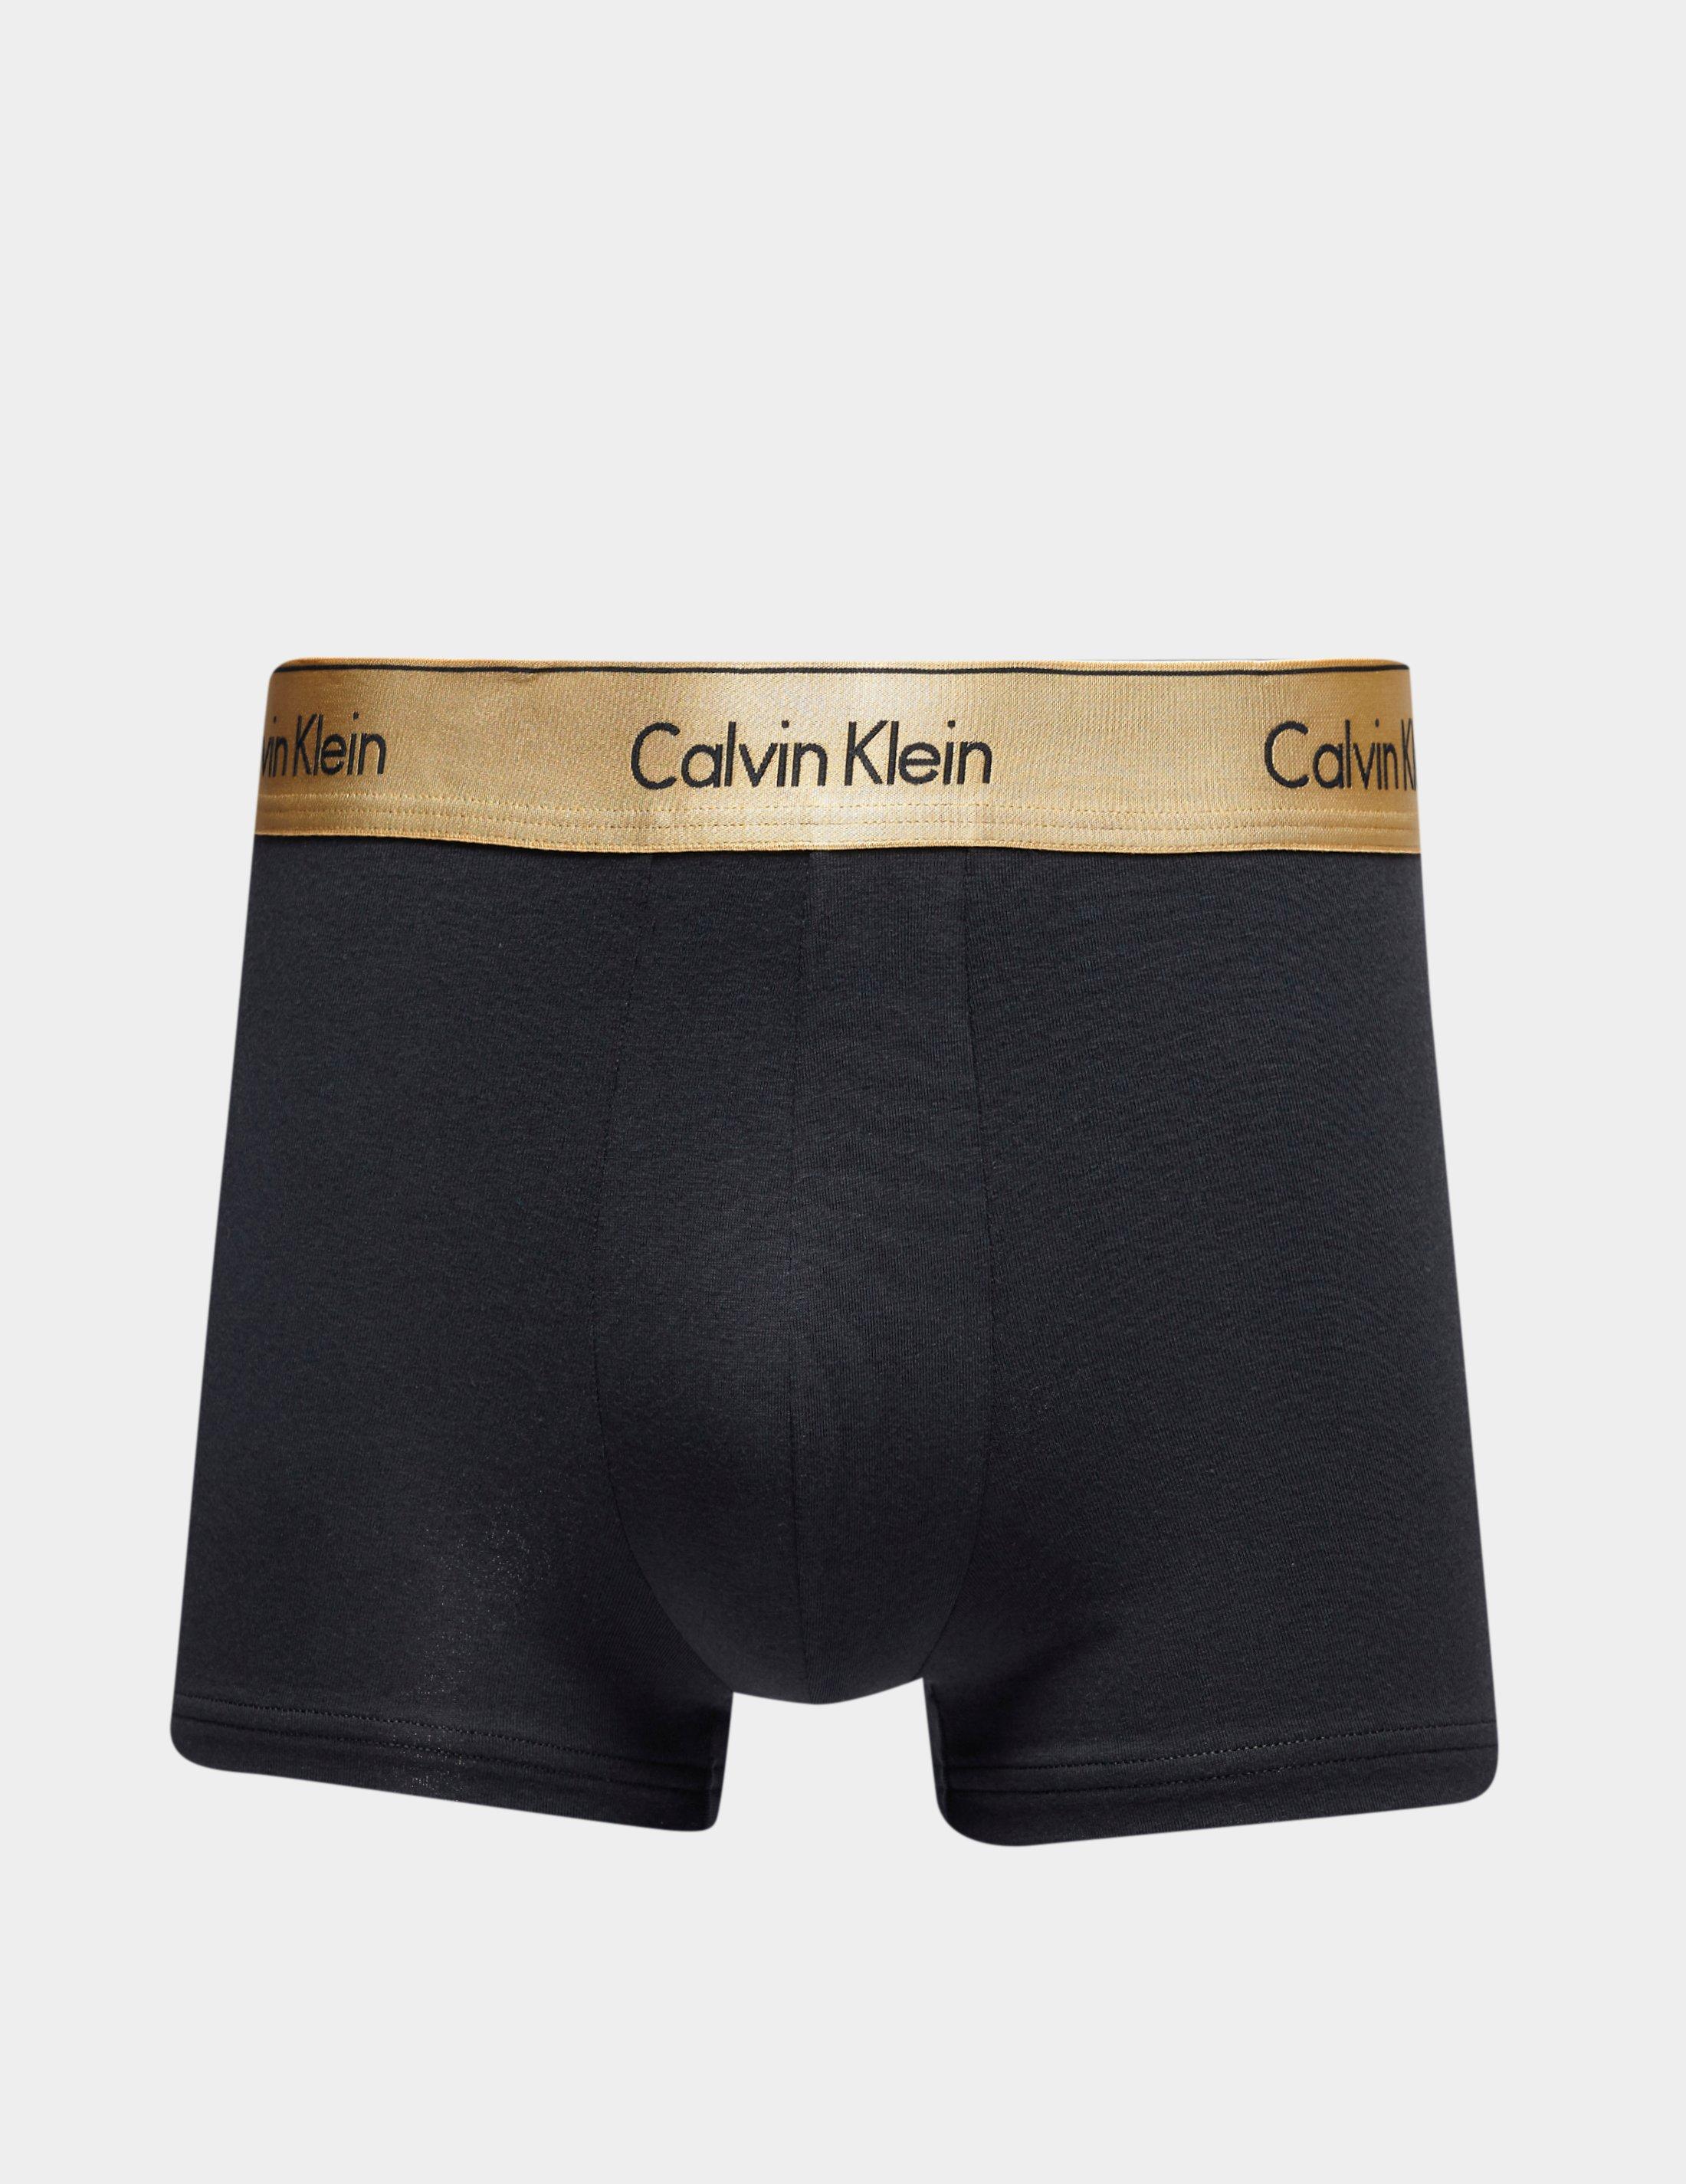 Calvin Klein Gold Waistband Boxer Shorts Black for Men | Lyst